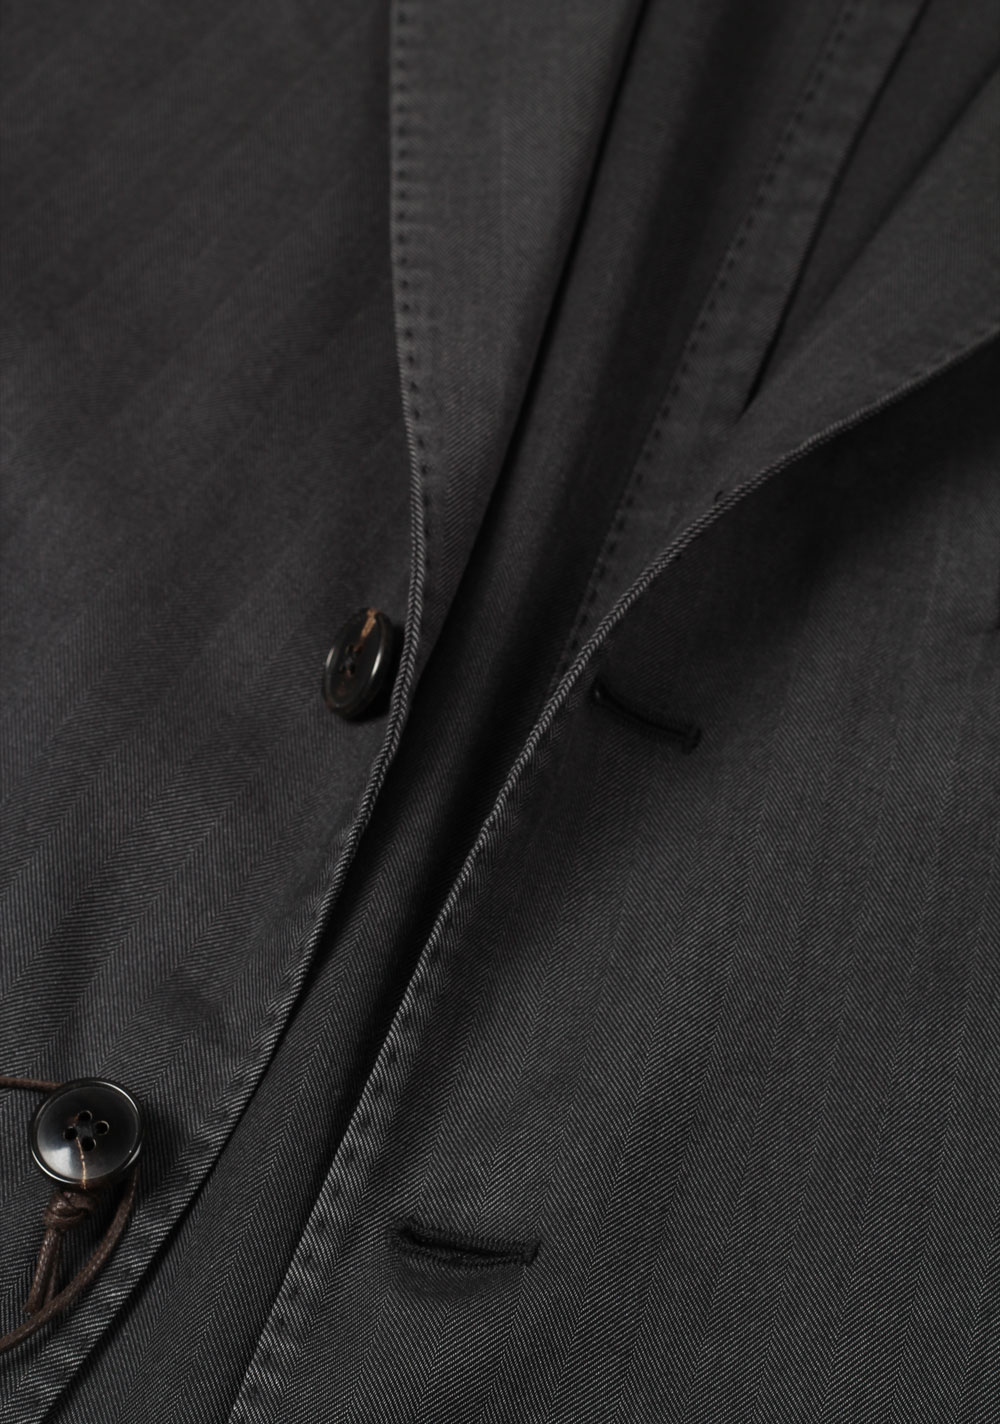 Boglioli K Jacket Gray Sport Coat Size 50 / 40R U.S. | Costume Limité